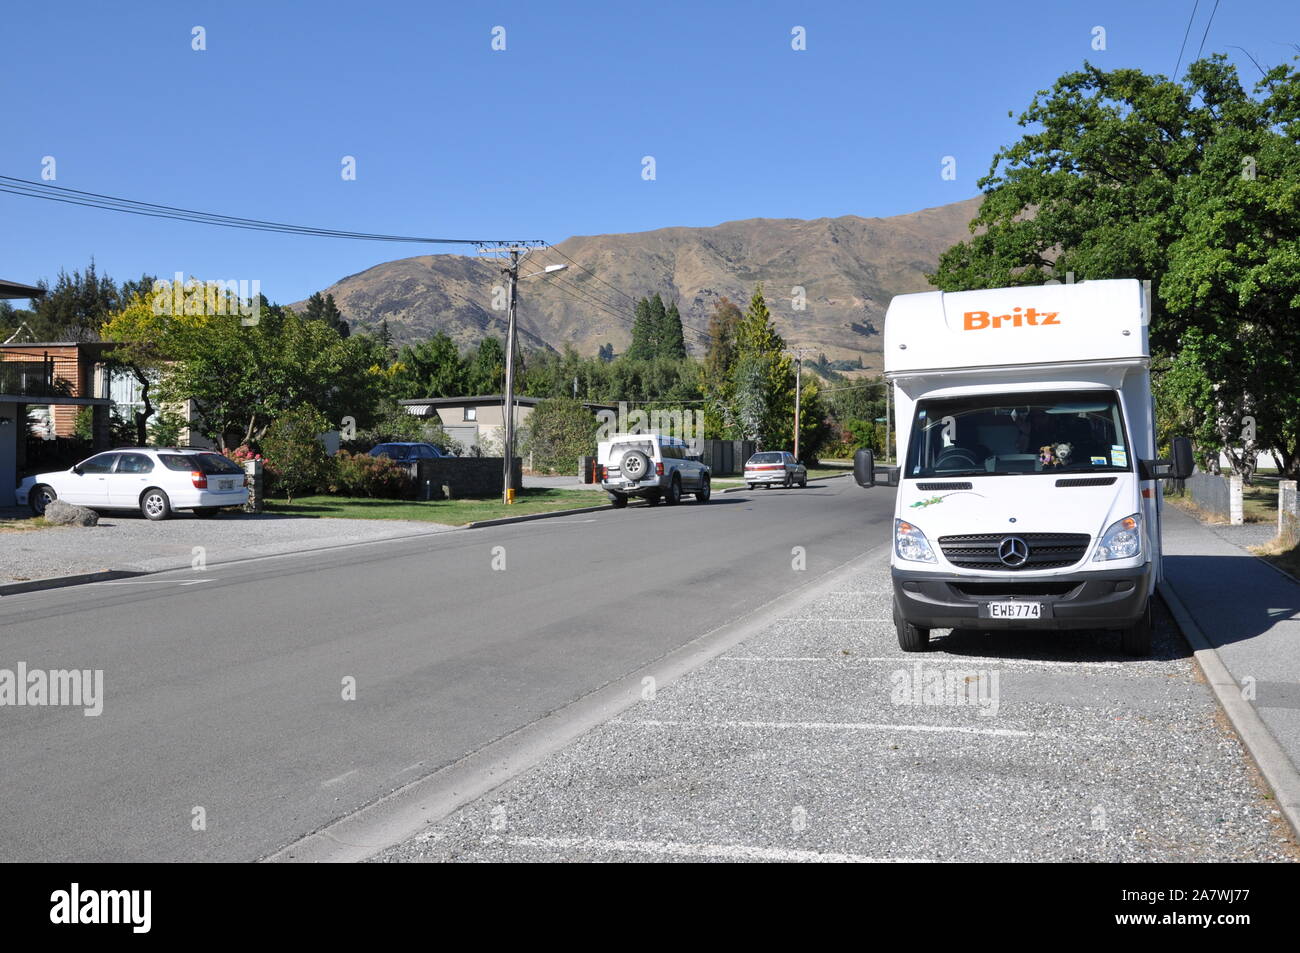 Britz motorhome, campervan, motor home camper van parked for night in residential area of Wanaka, Otago, New Zealand. Parking in street Stock Photo